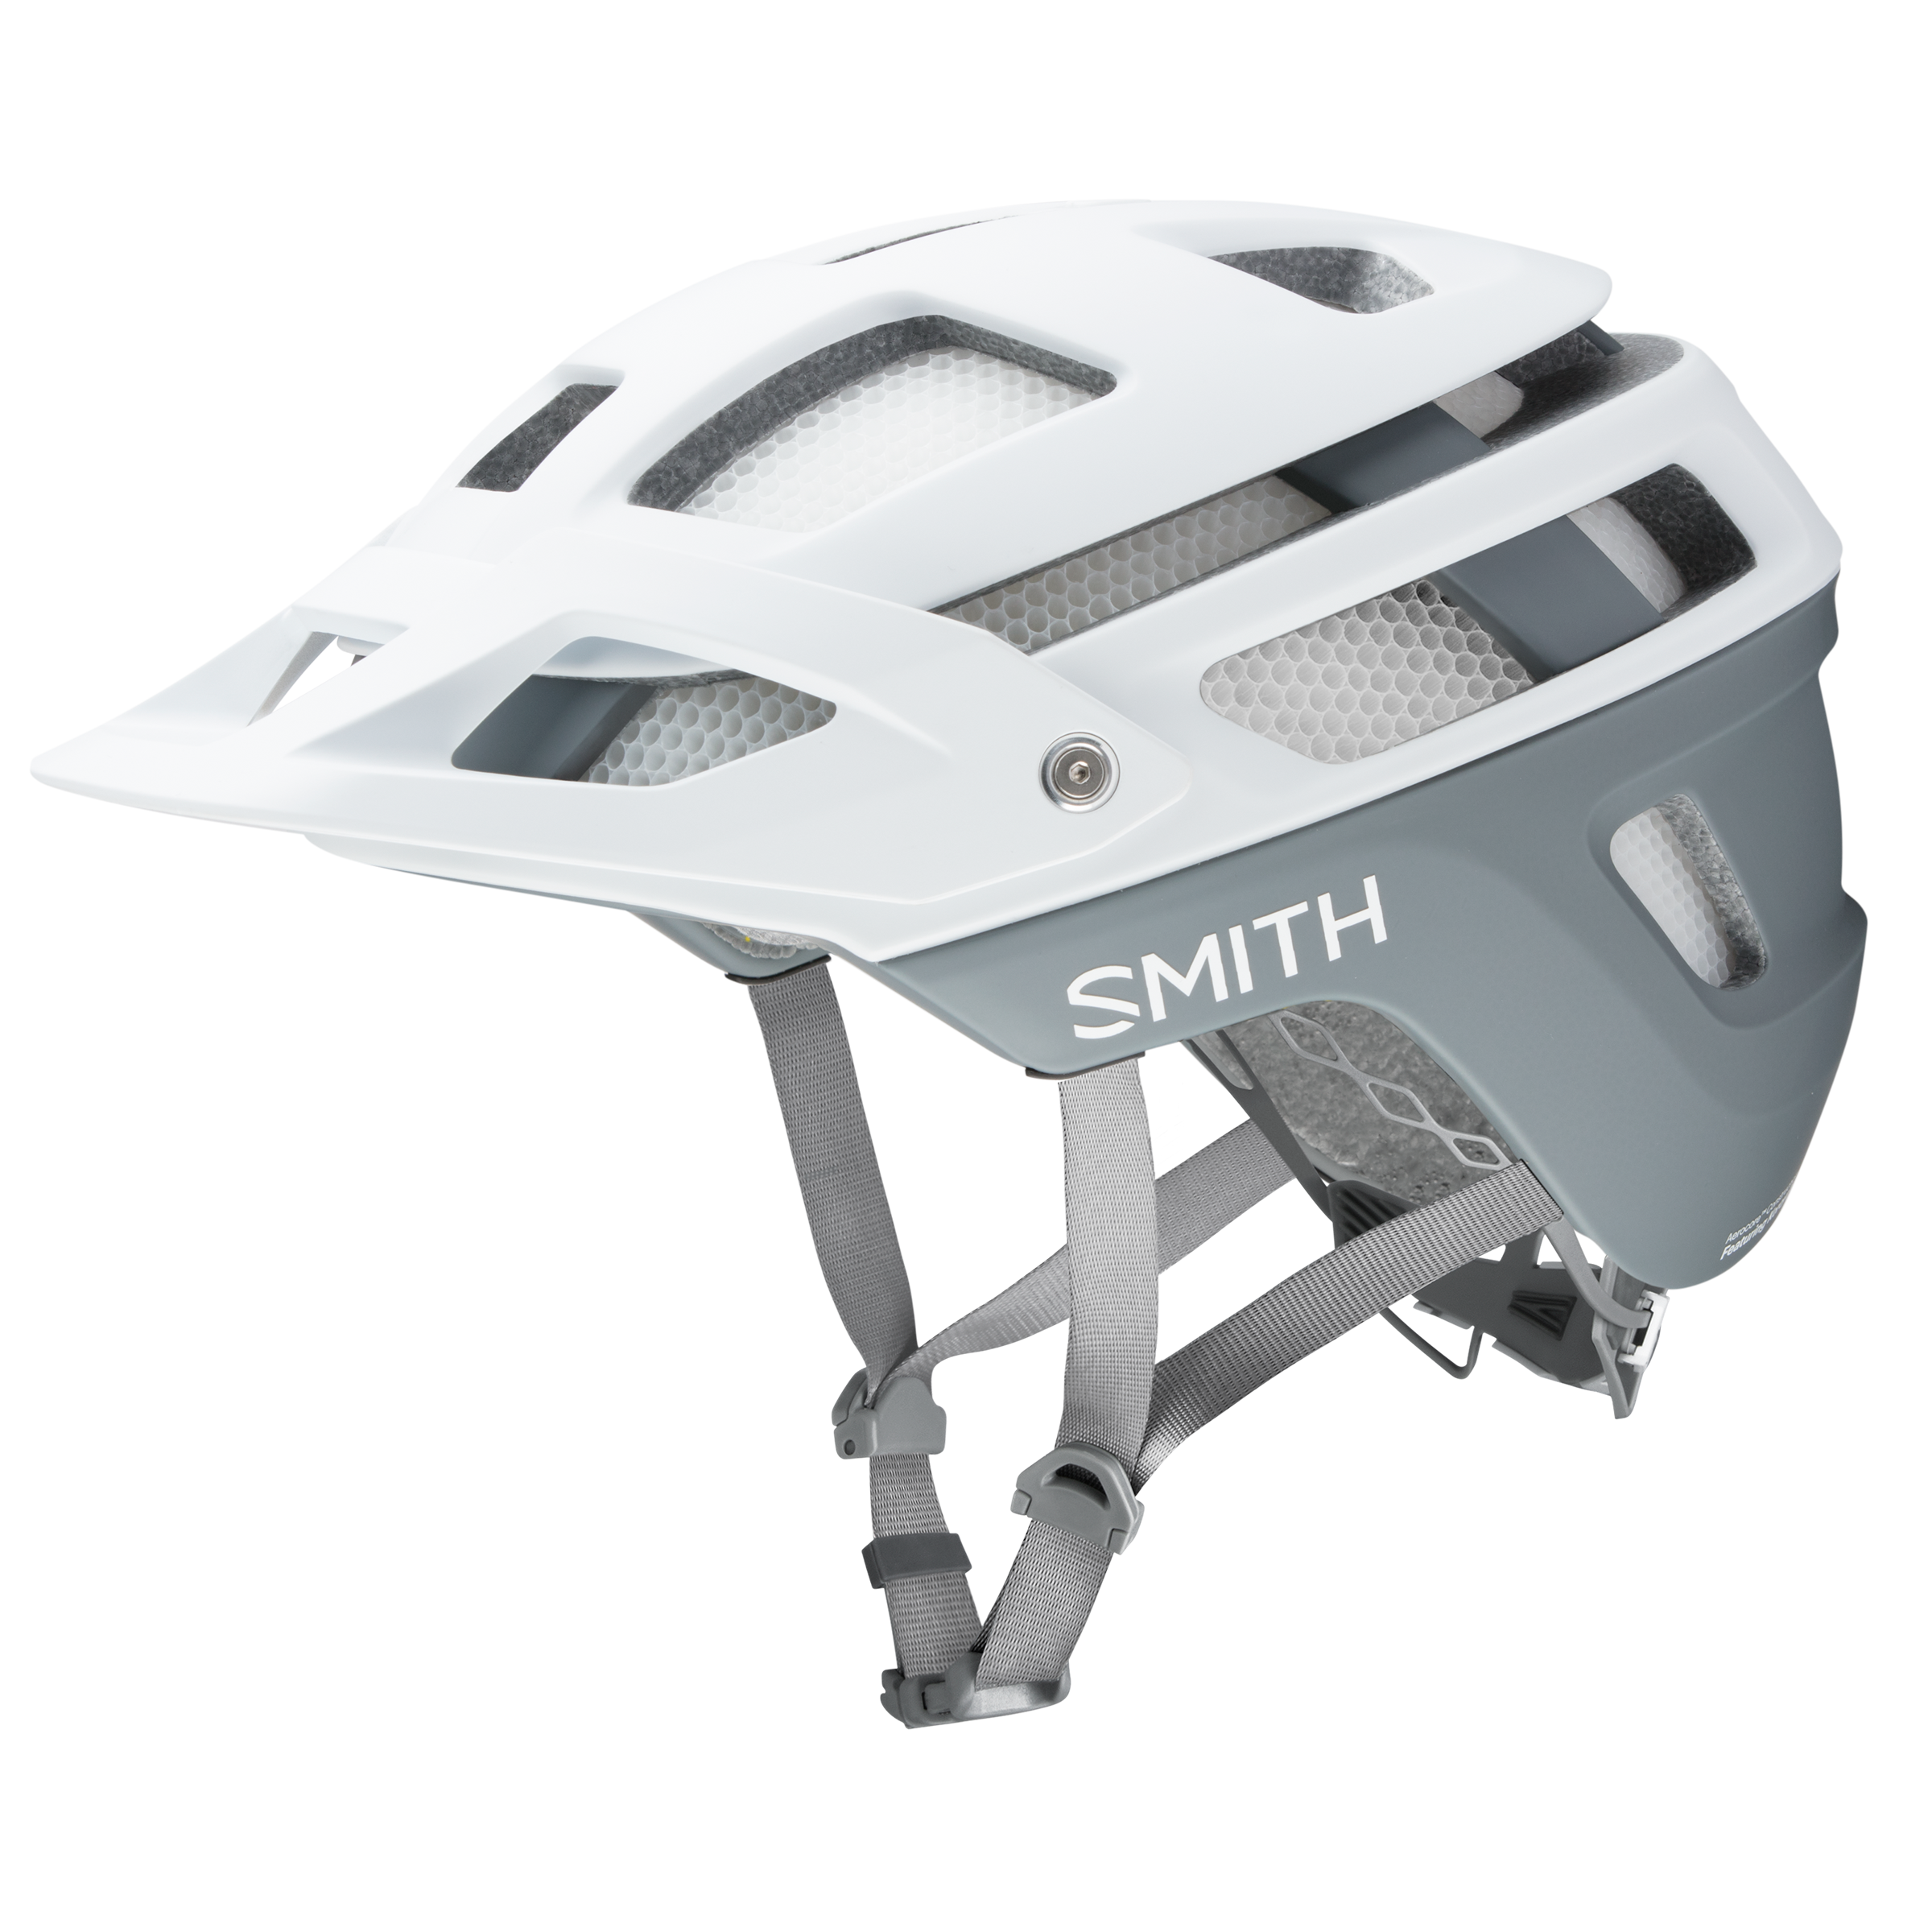 smith optics forefront ii mips mtb helmet